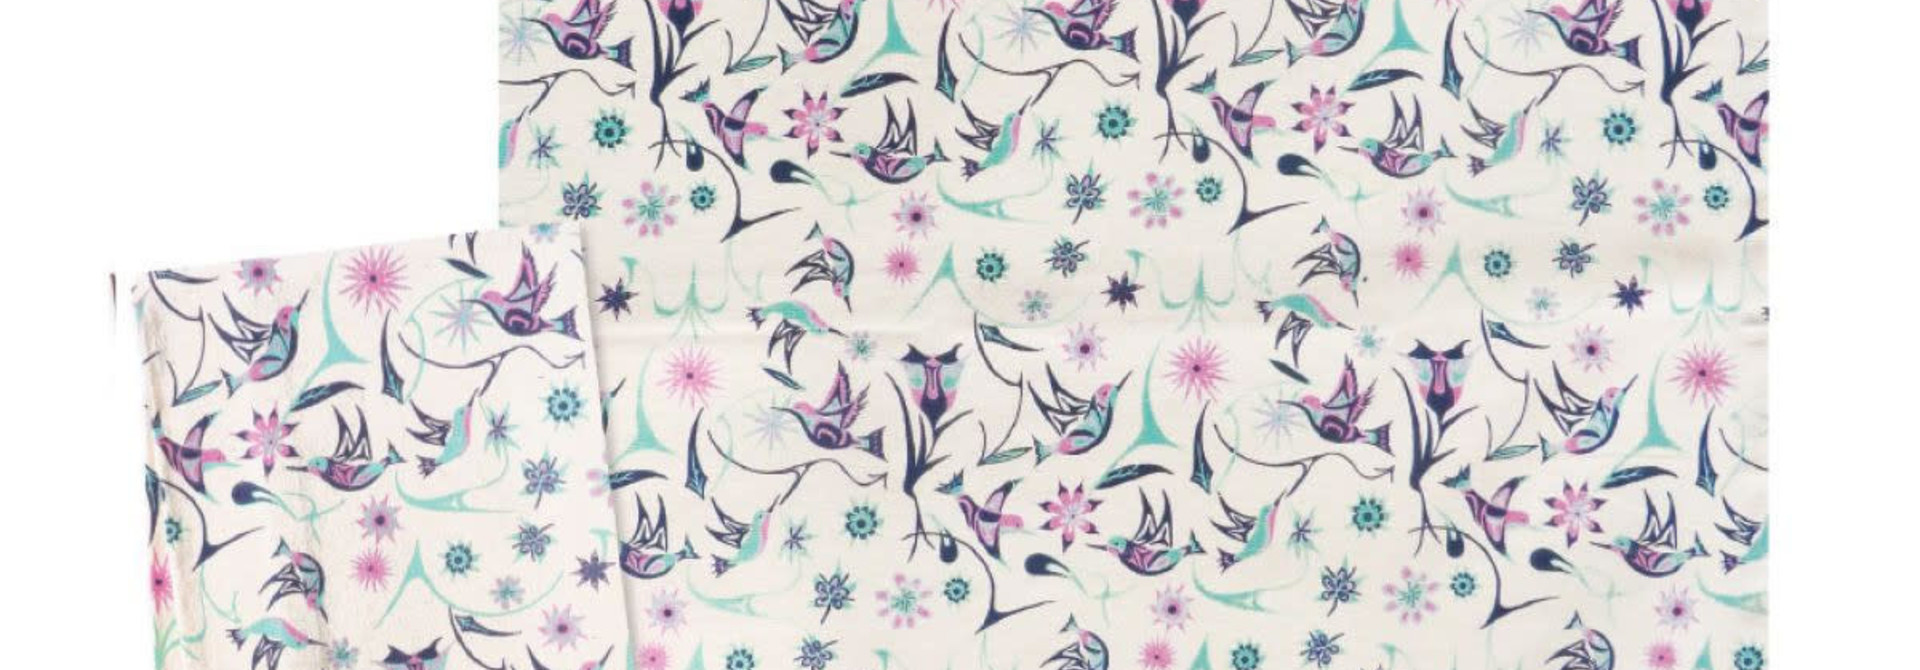 Tea Towel-Hummingbirds by Nicole LaRock